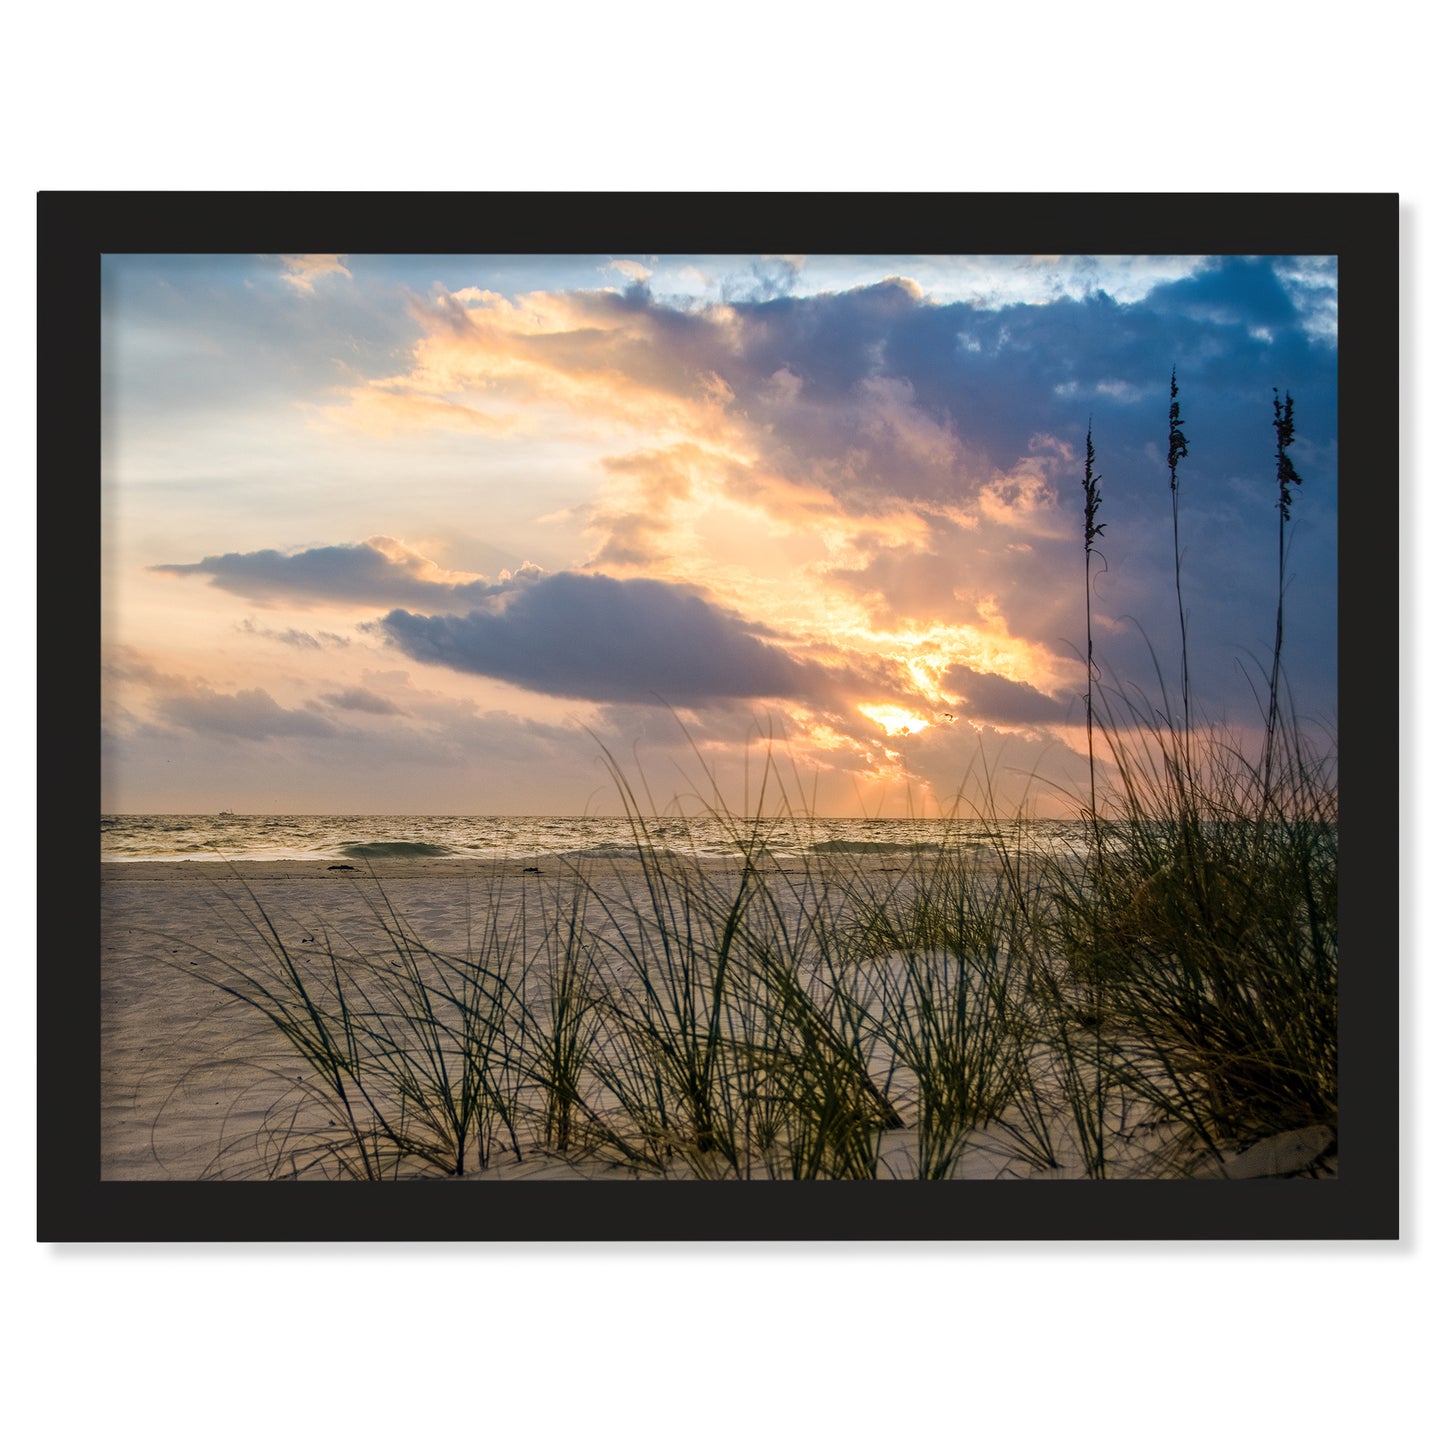 Beach Art Prints Framed: Anna Maria Island Cloudy Beach Sunset 2 - Coastal / Beach / Seascape / Nature / Landscape Photo Framed Wall Art Print - Artwork